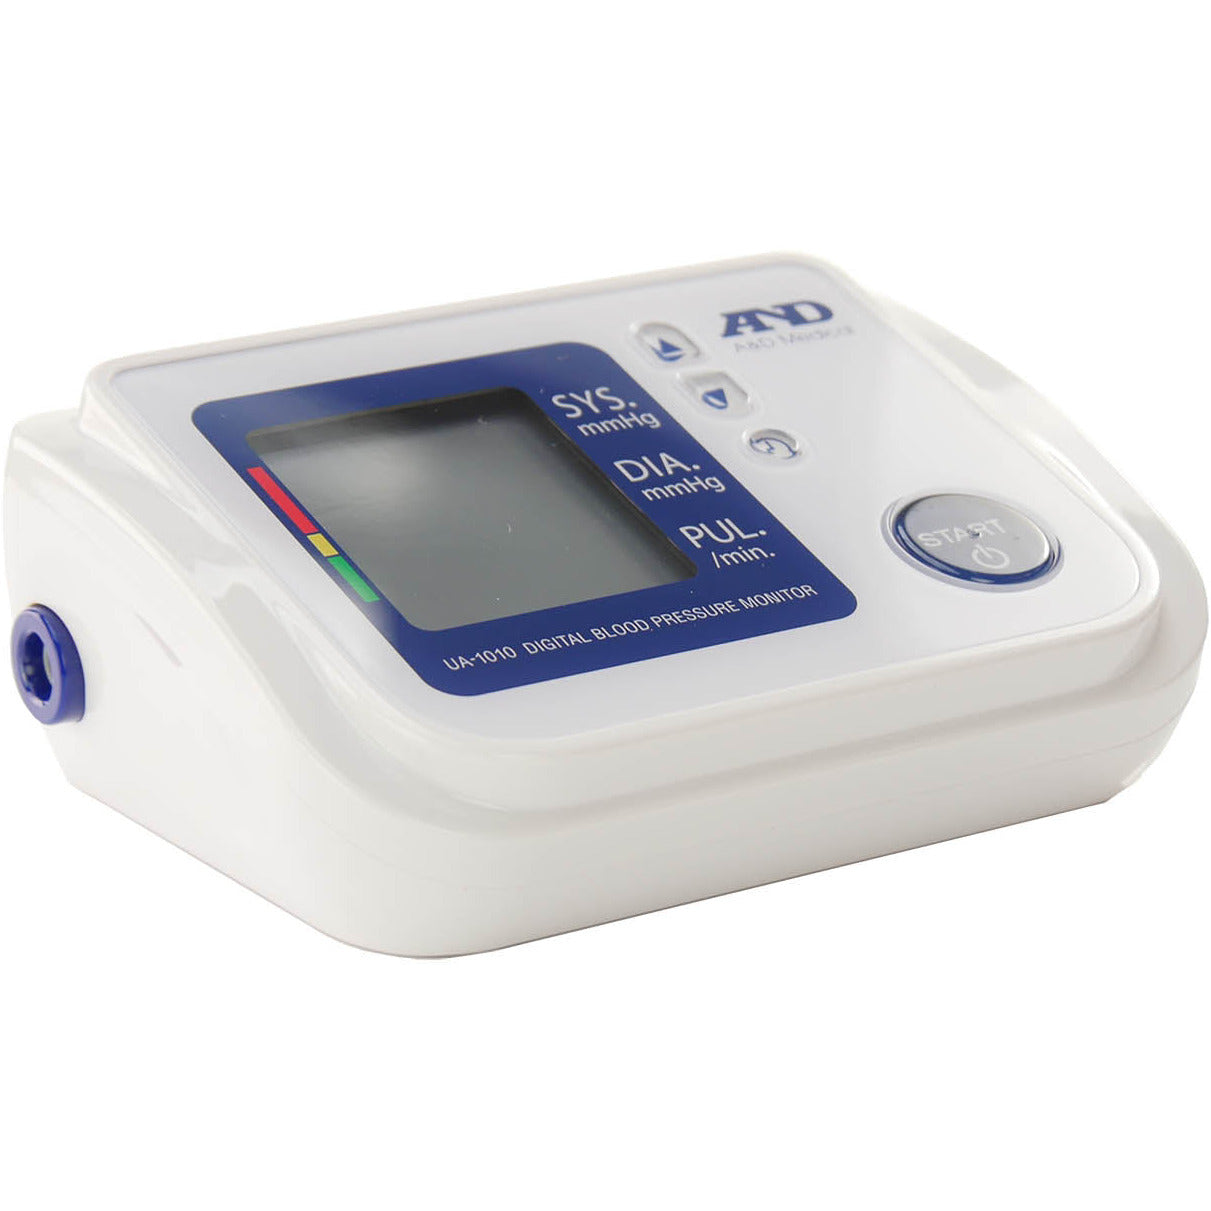 A&D UA-1010 Advanced Automatic Blood Pressure Monitor